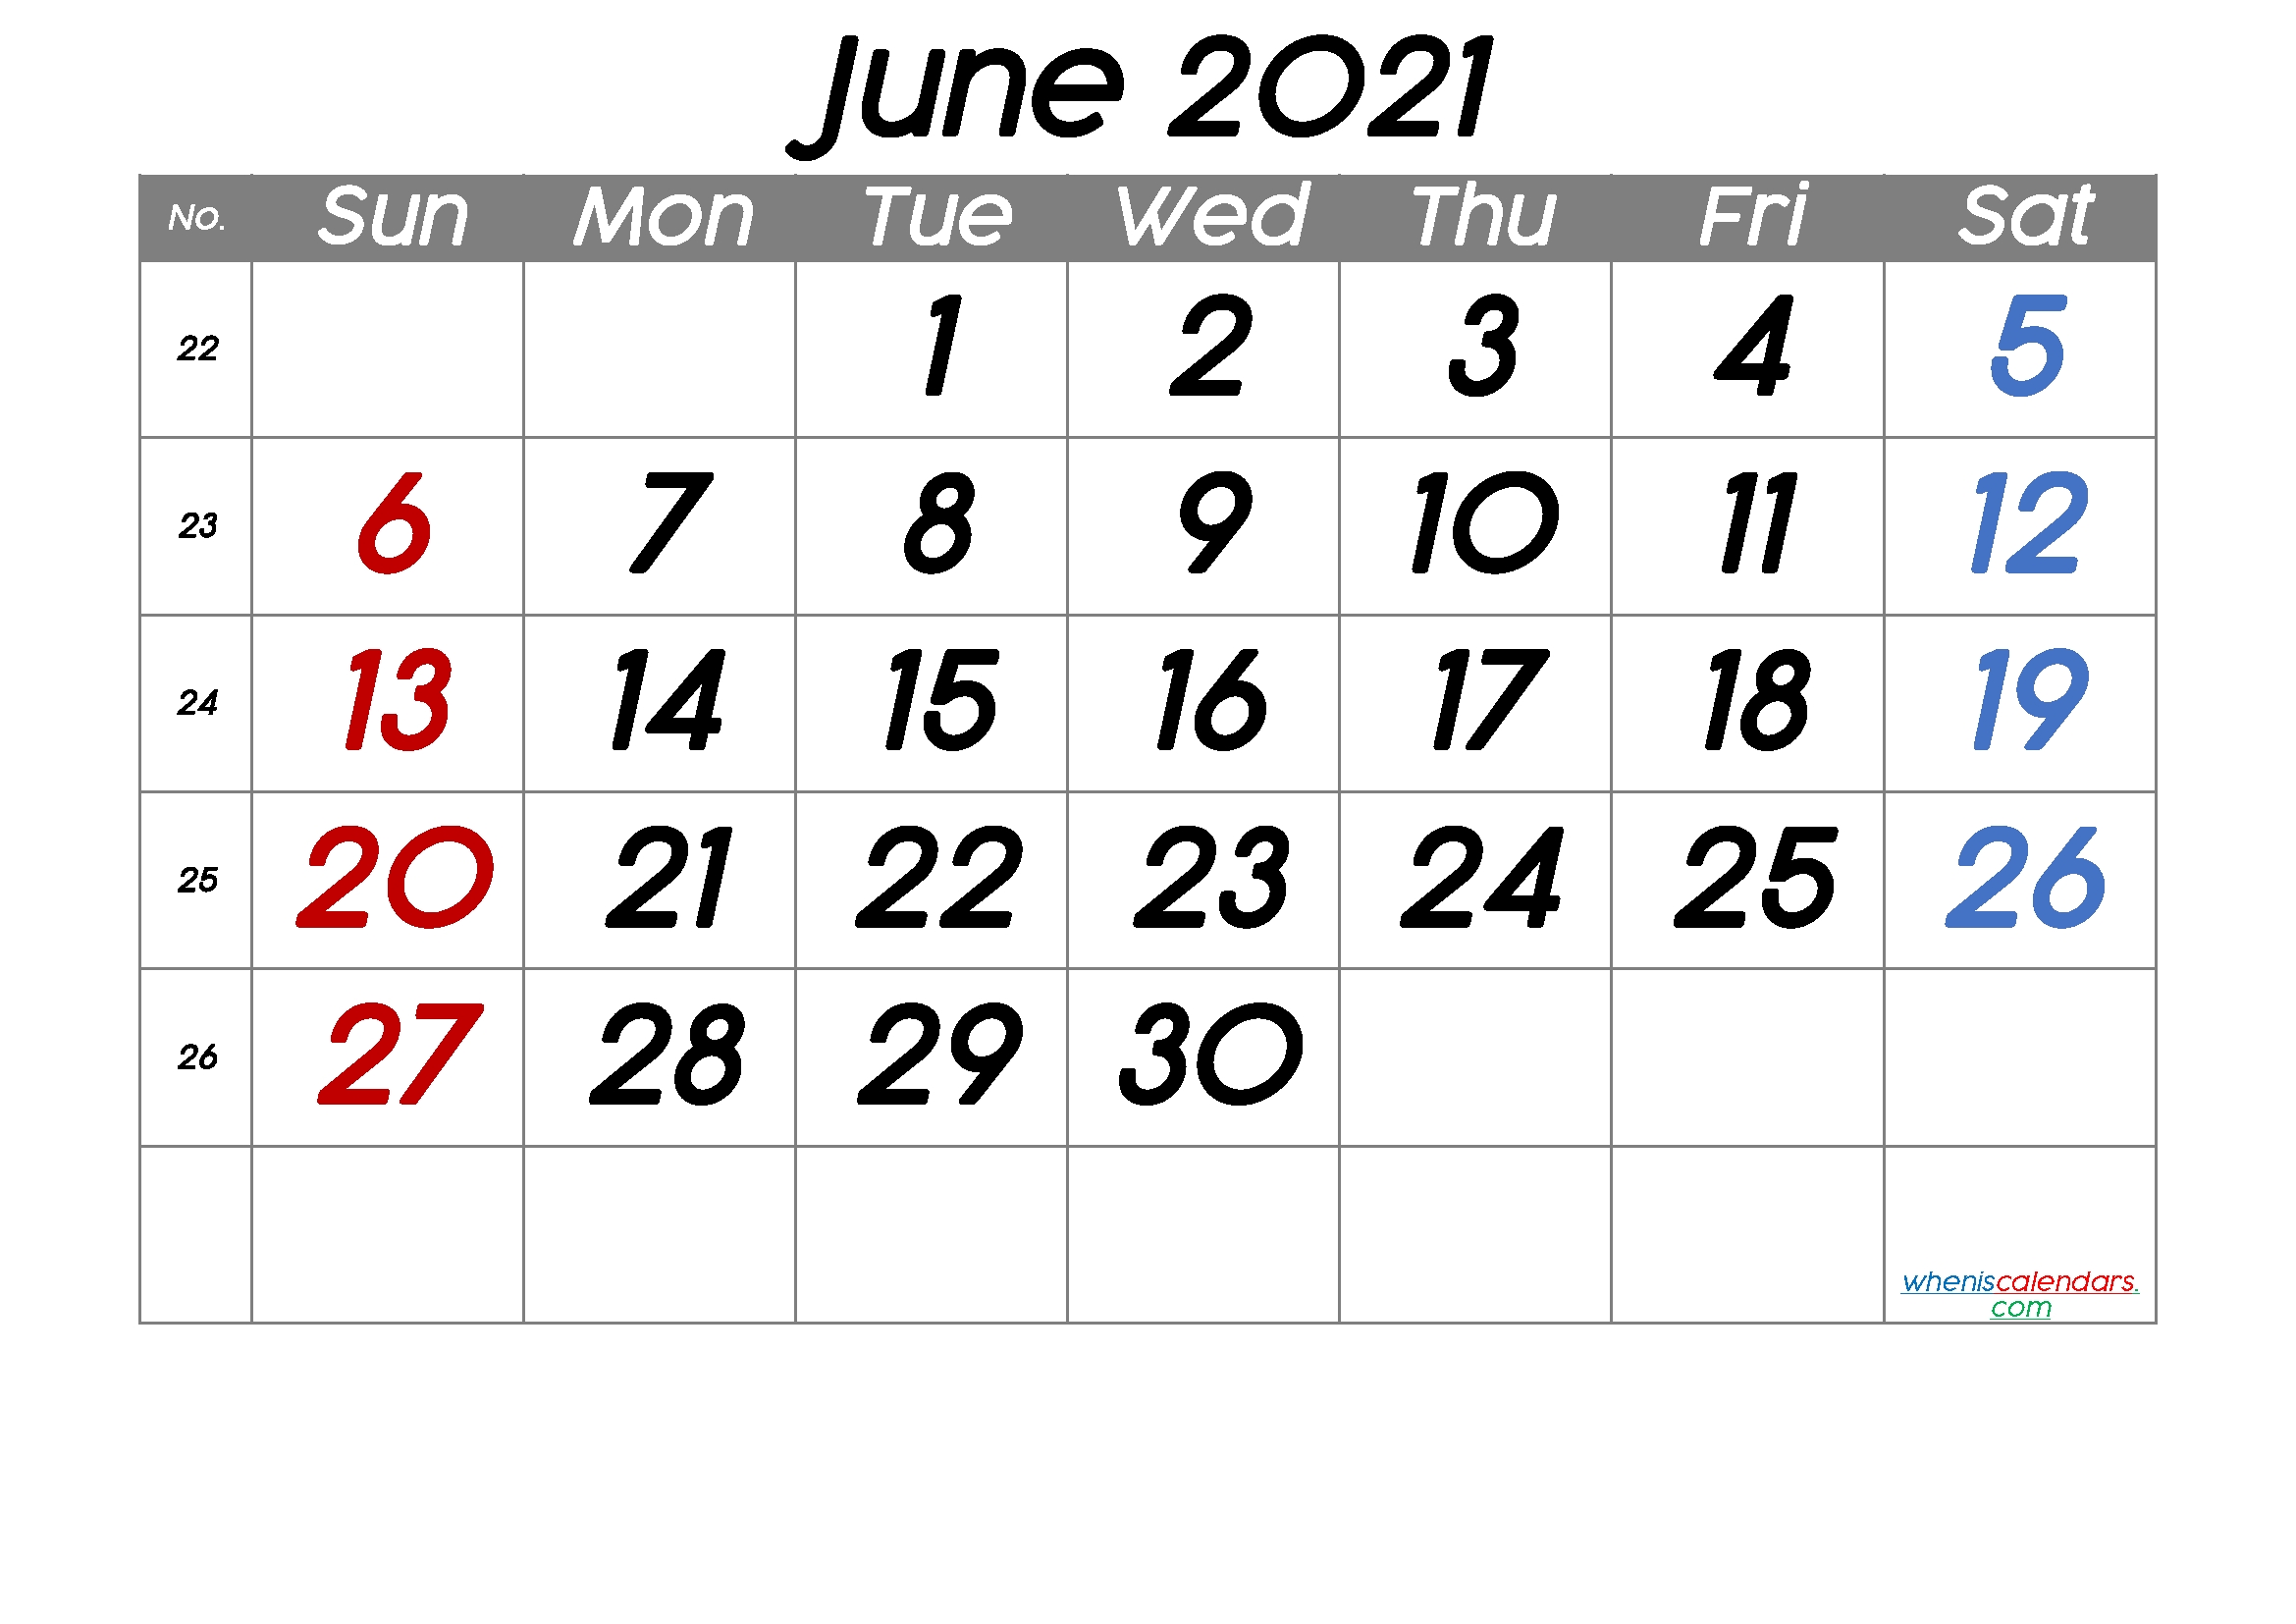 Catch July 2021 Disney Calendar Downloadable